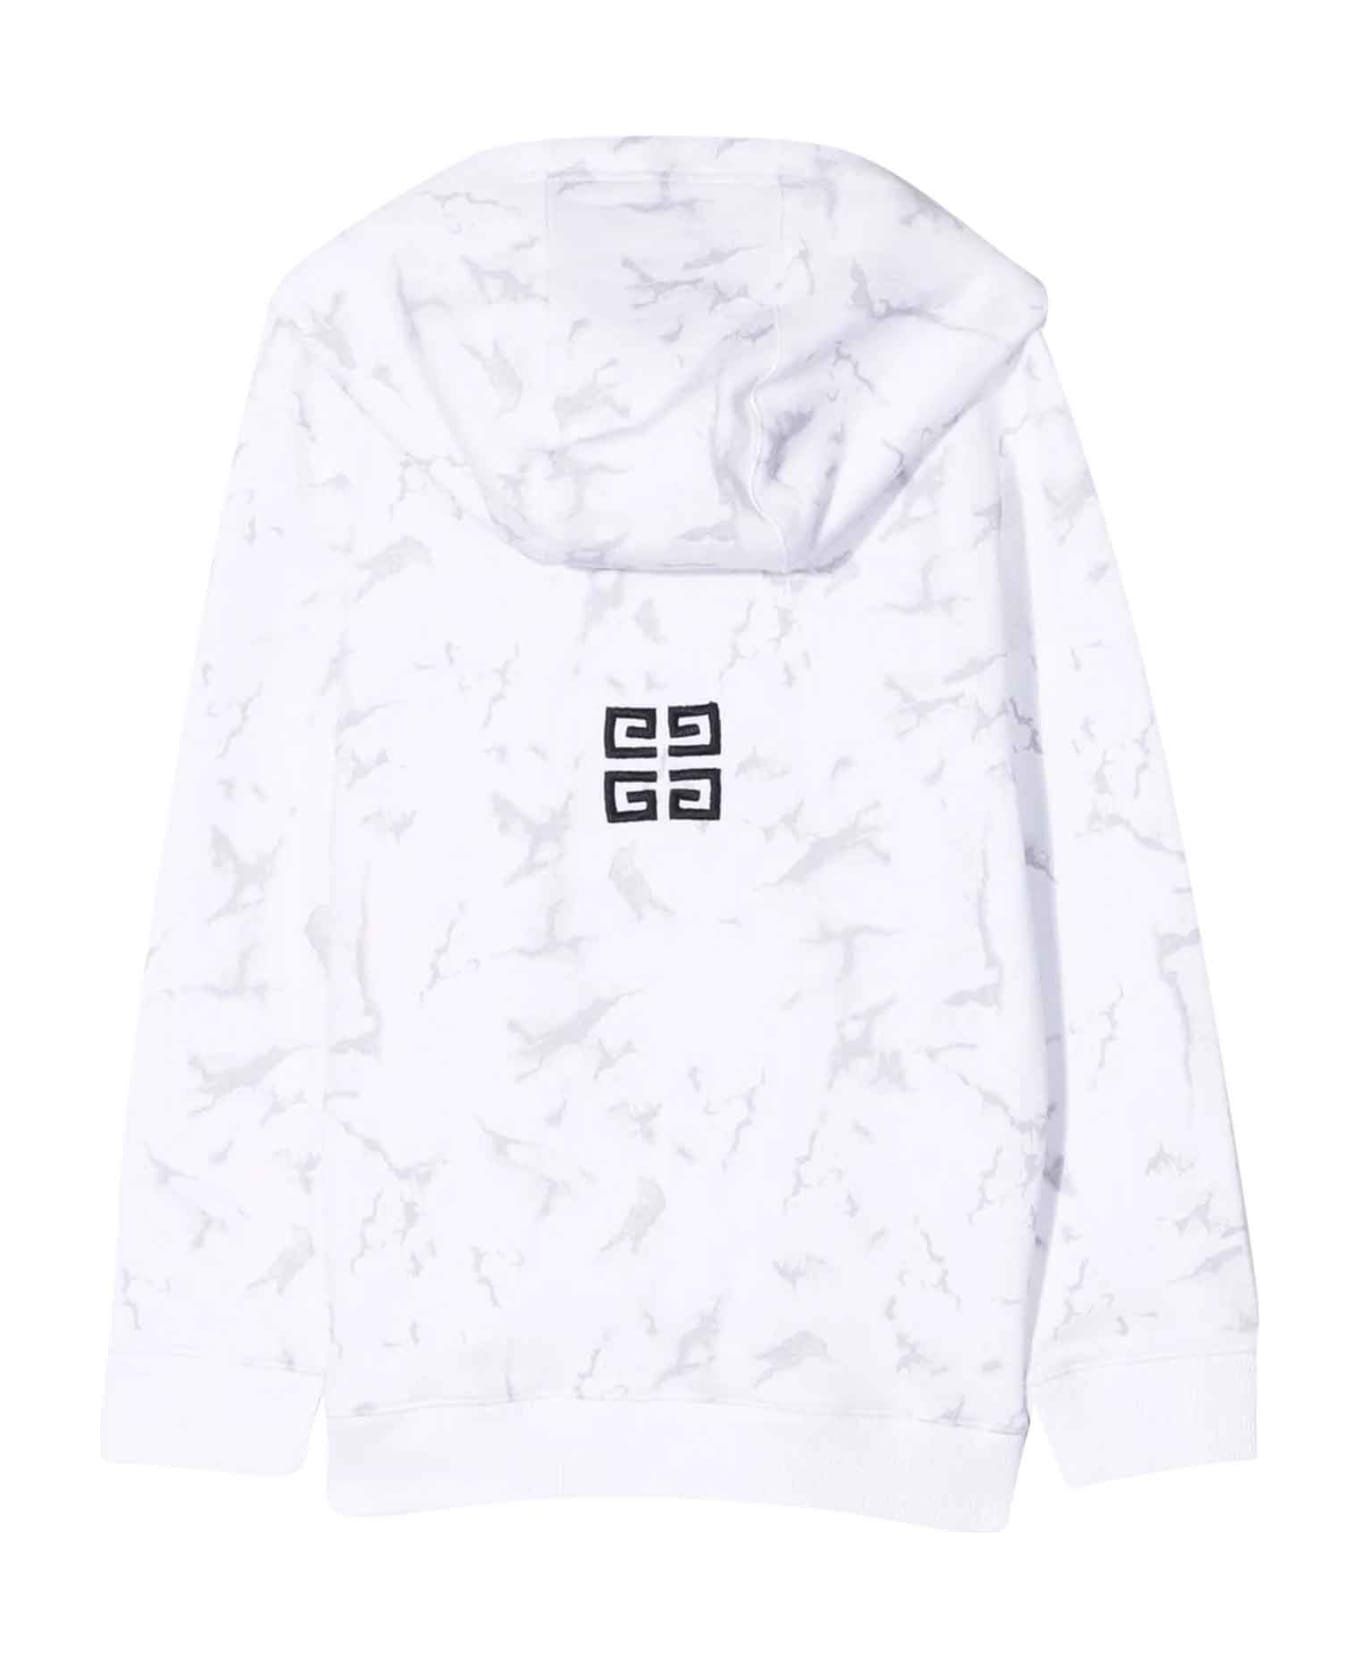 Givenchy White Unisex Sweatshirt With Hood And Print - Bianco